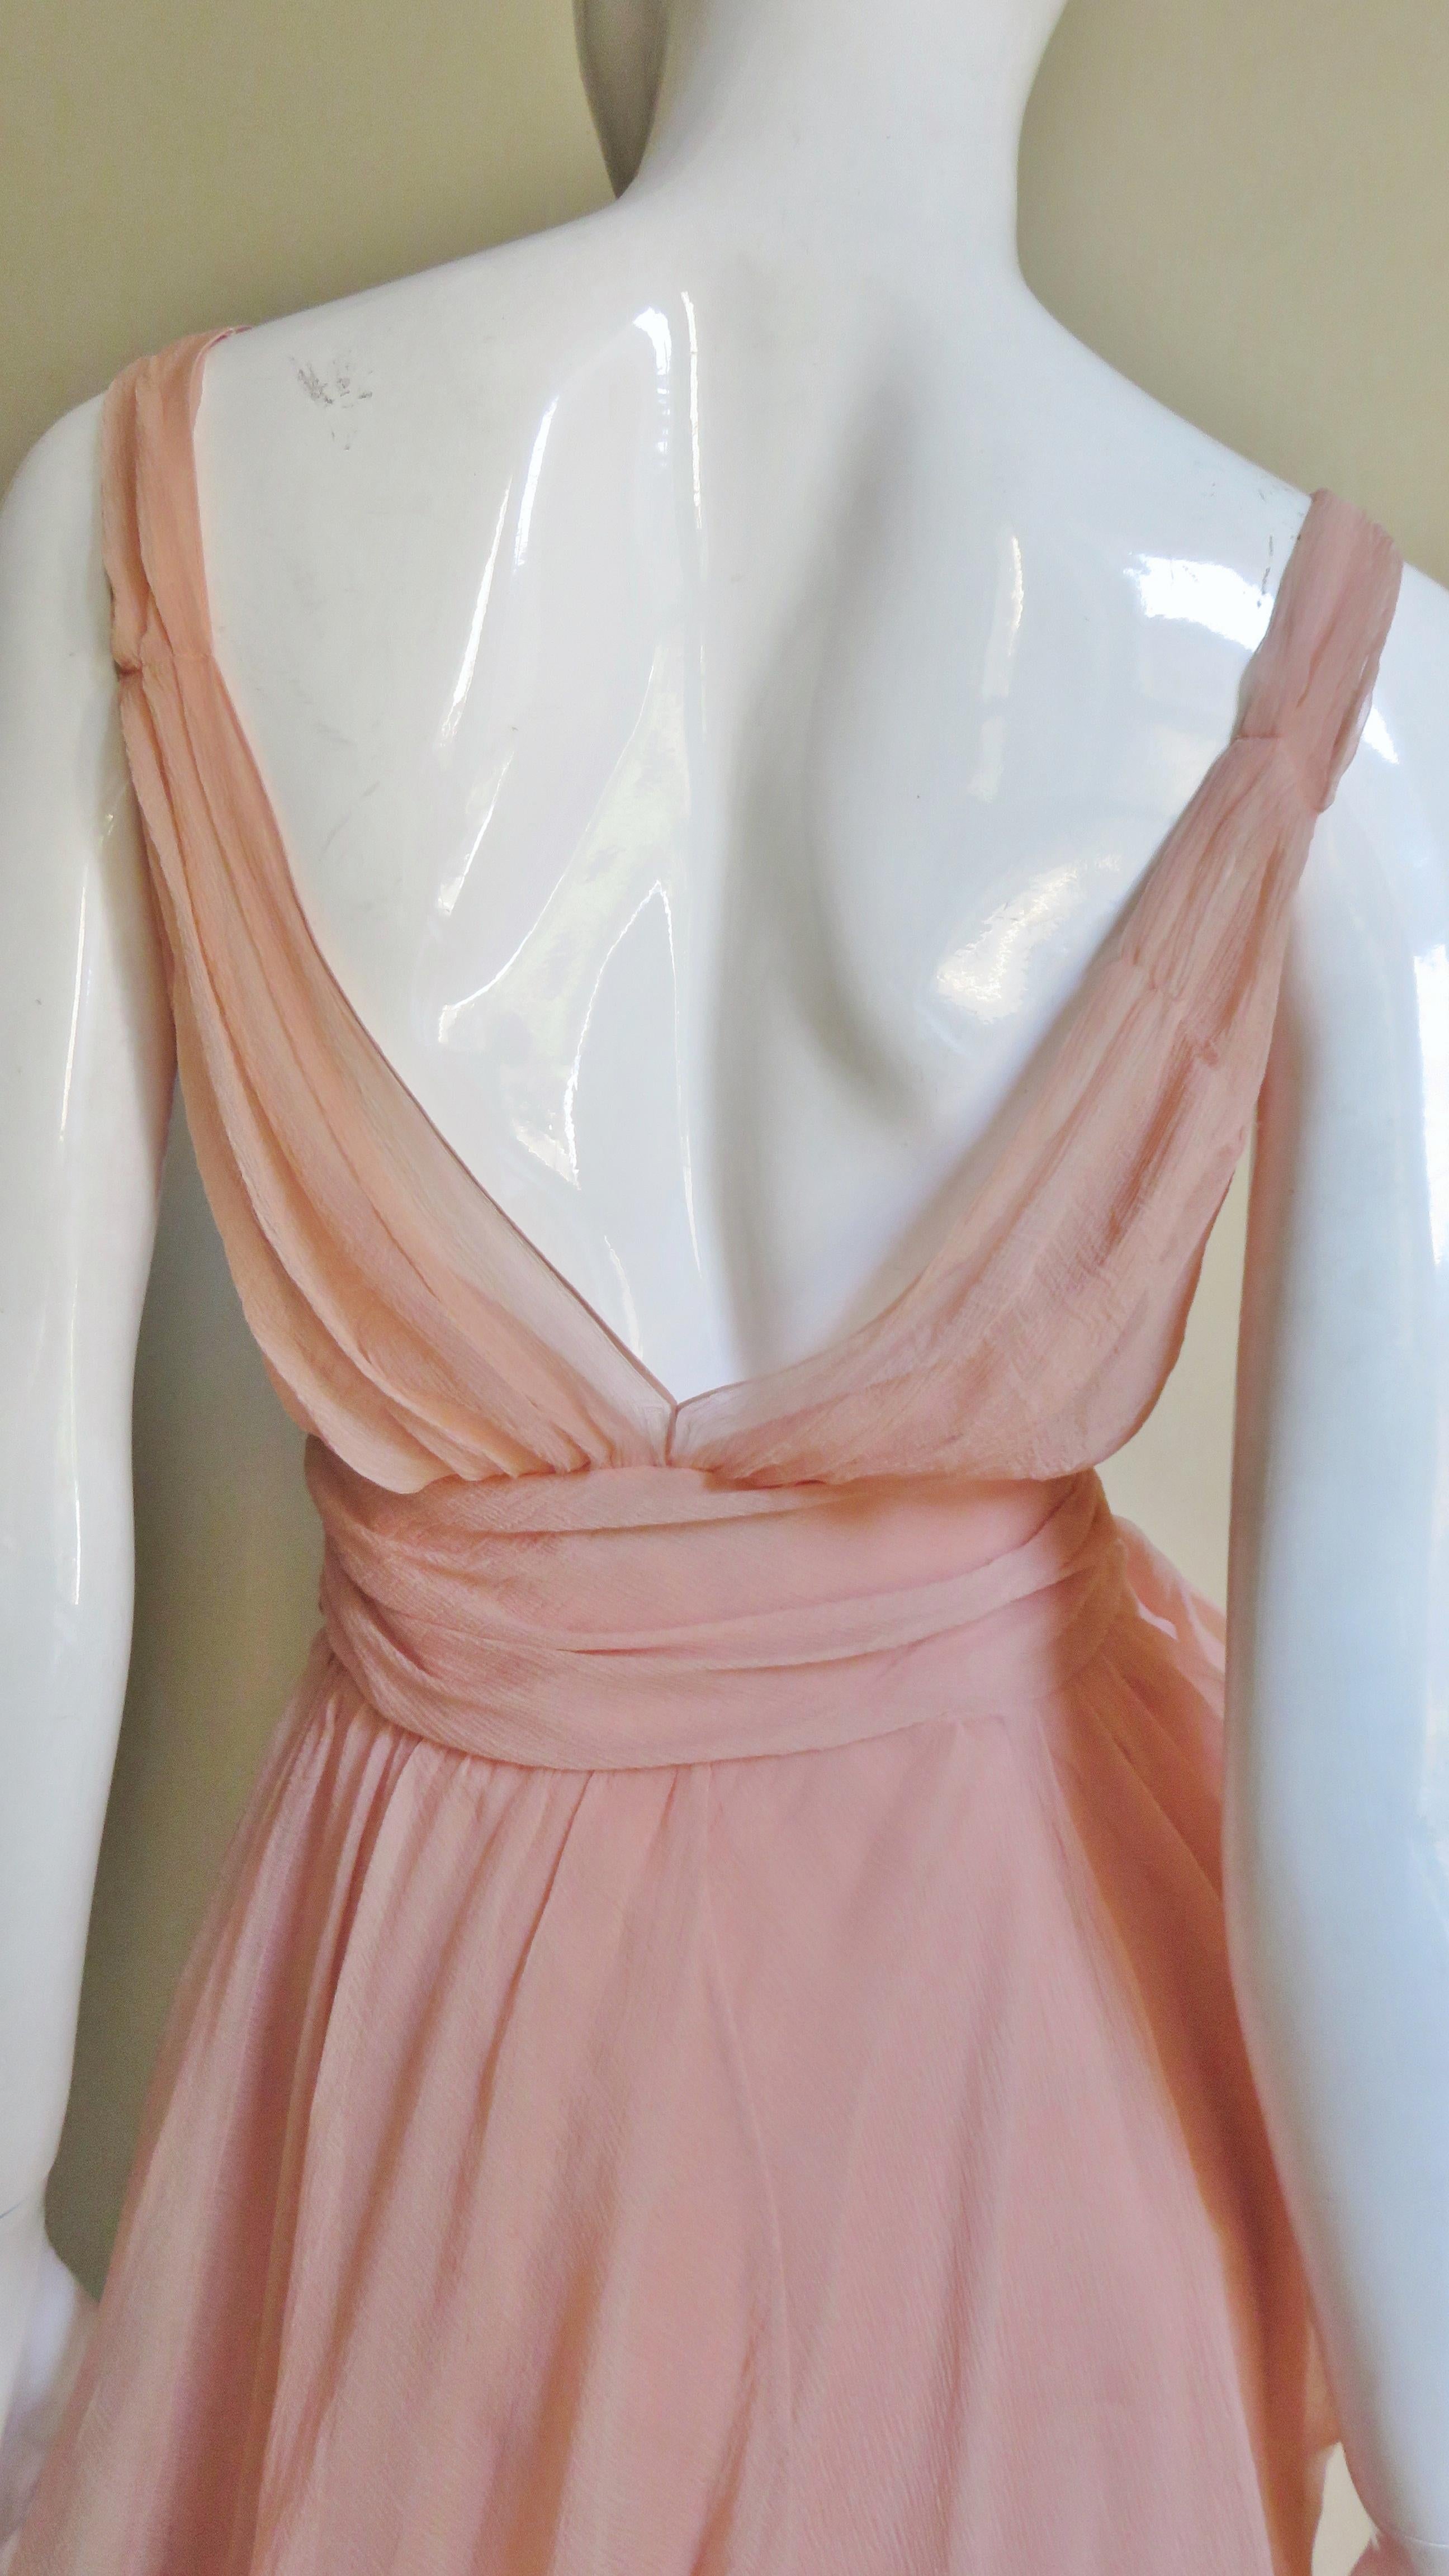  John Galliano for Christian Dior Silk Dress 6